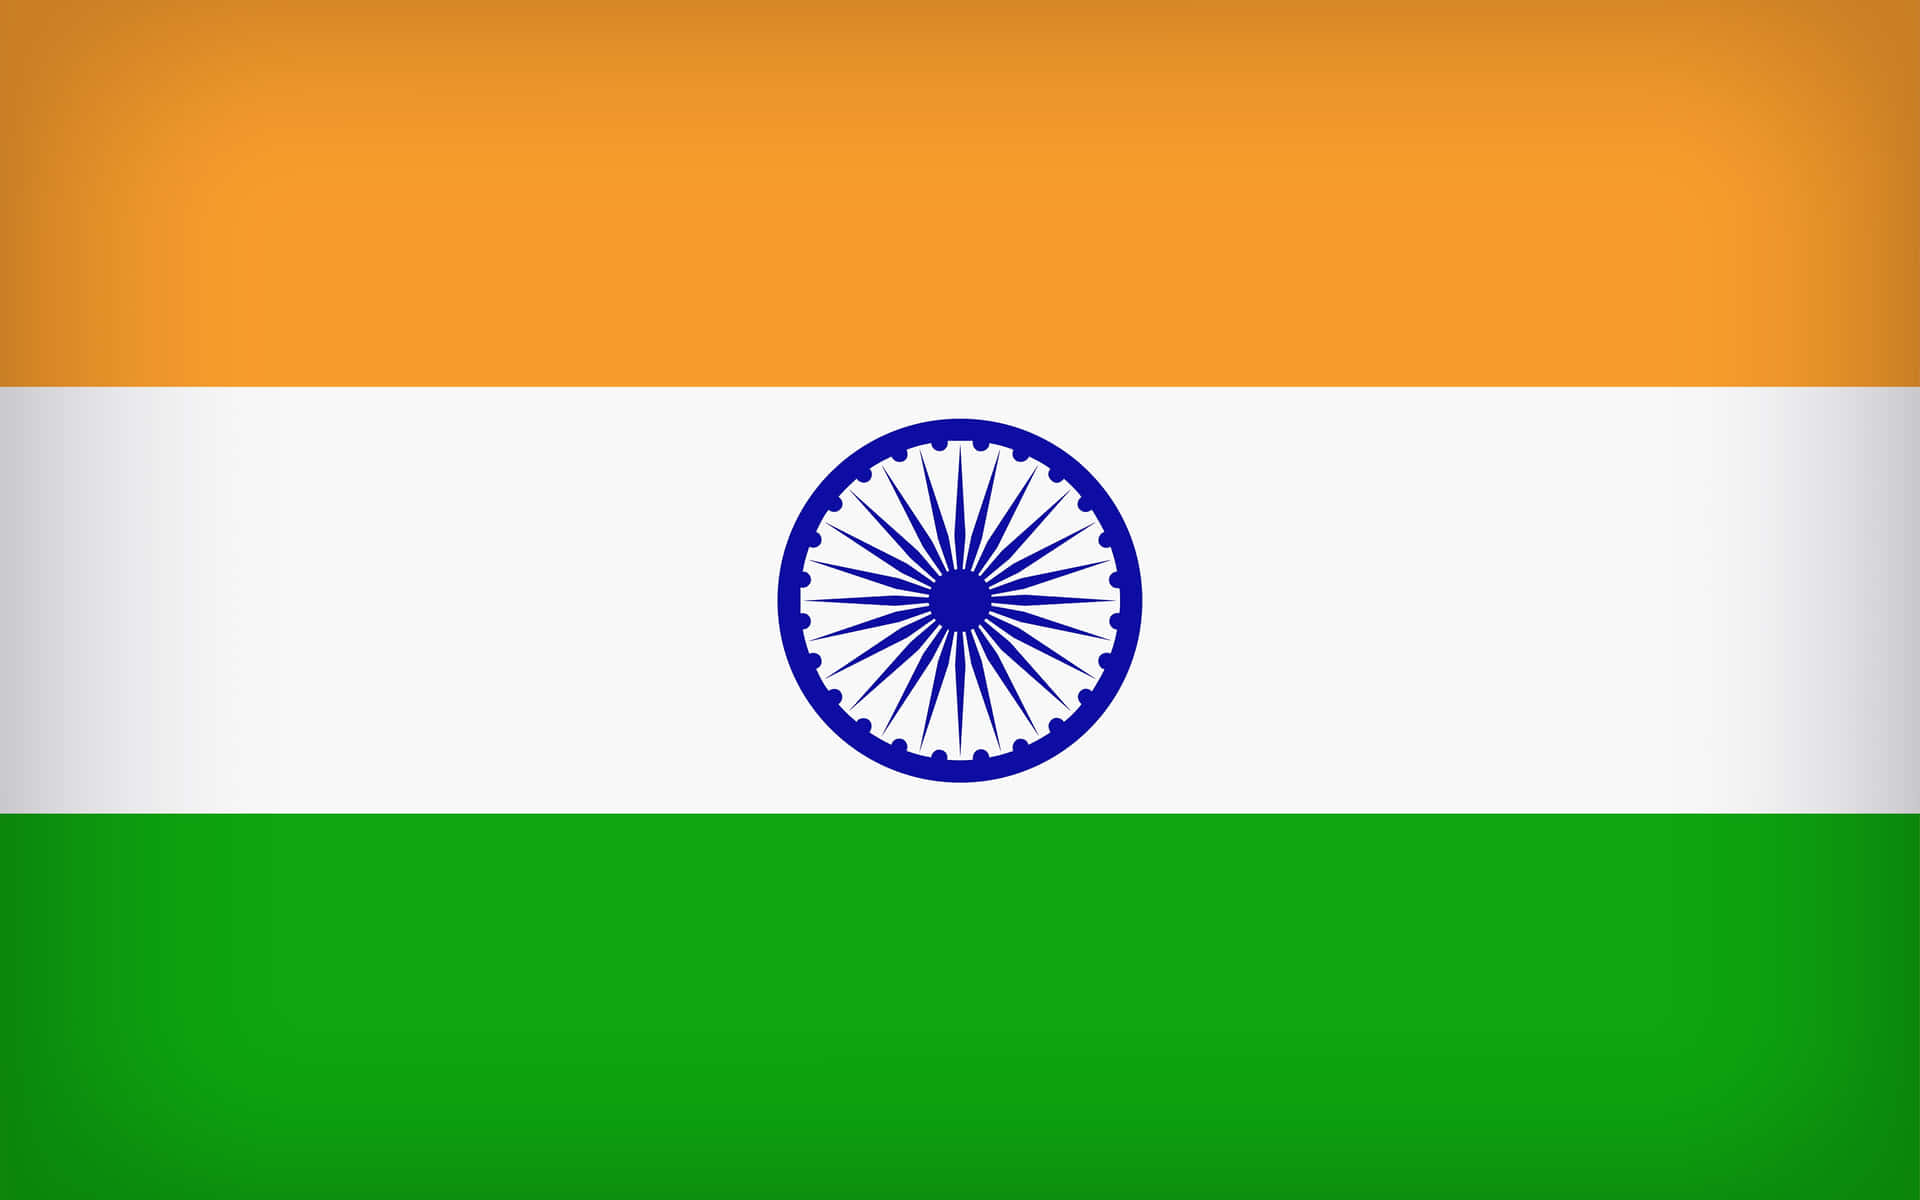 Indiskaflaggan